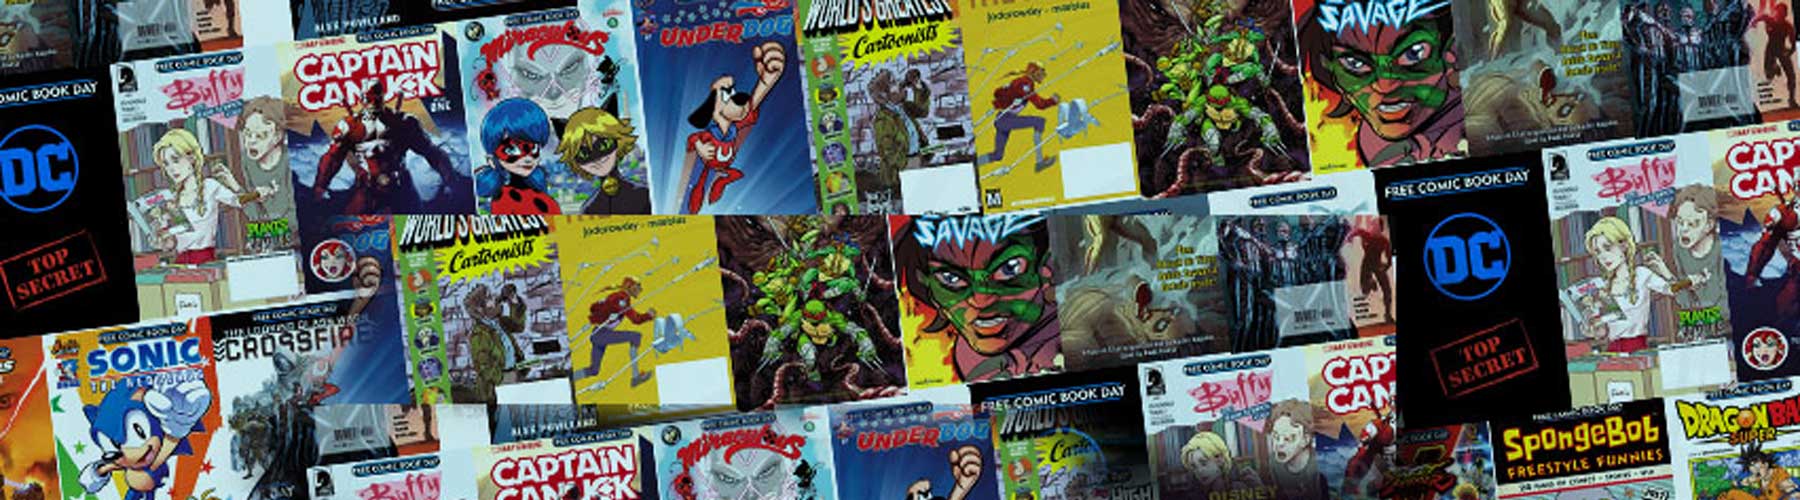 X-Men Related Comics